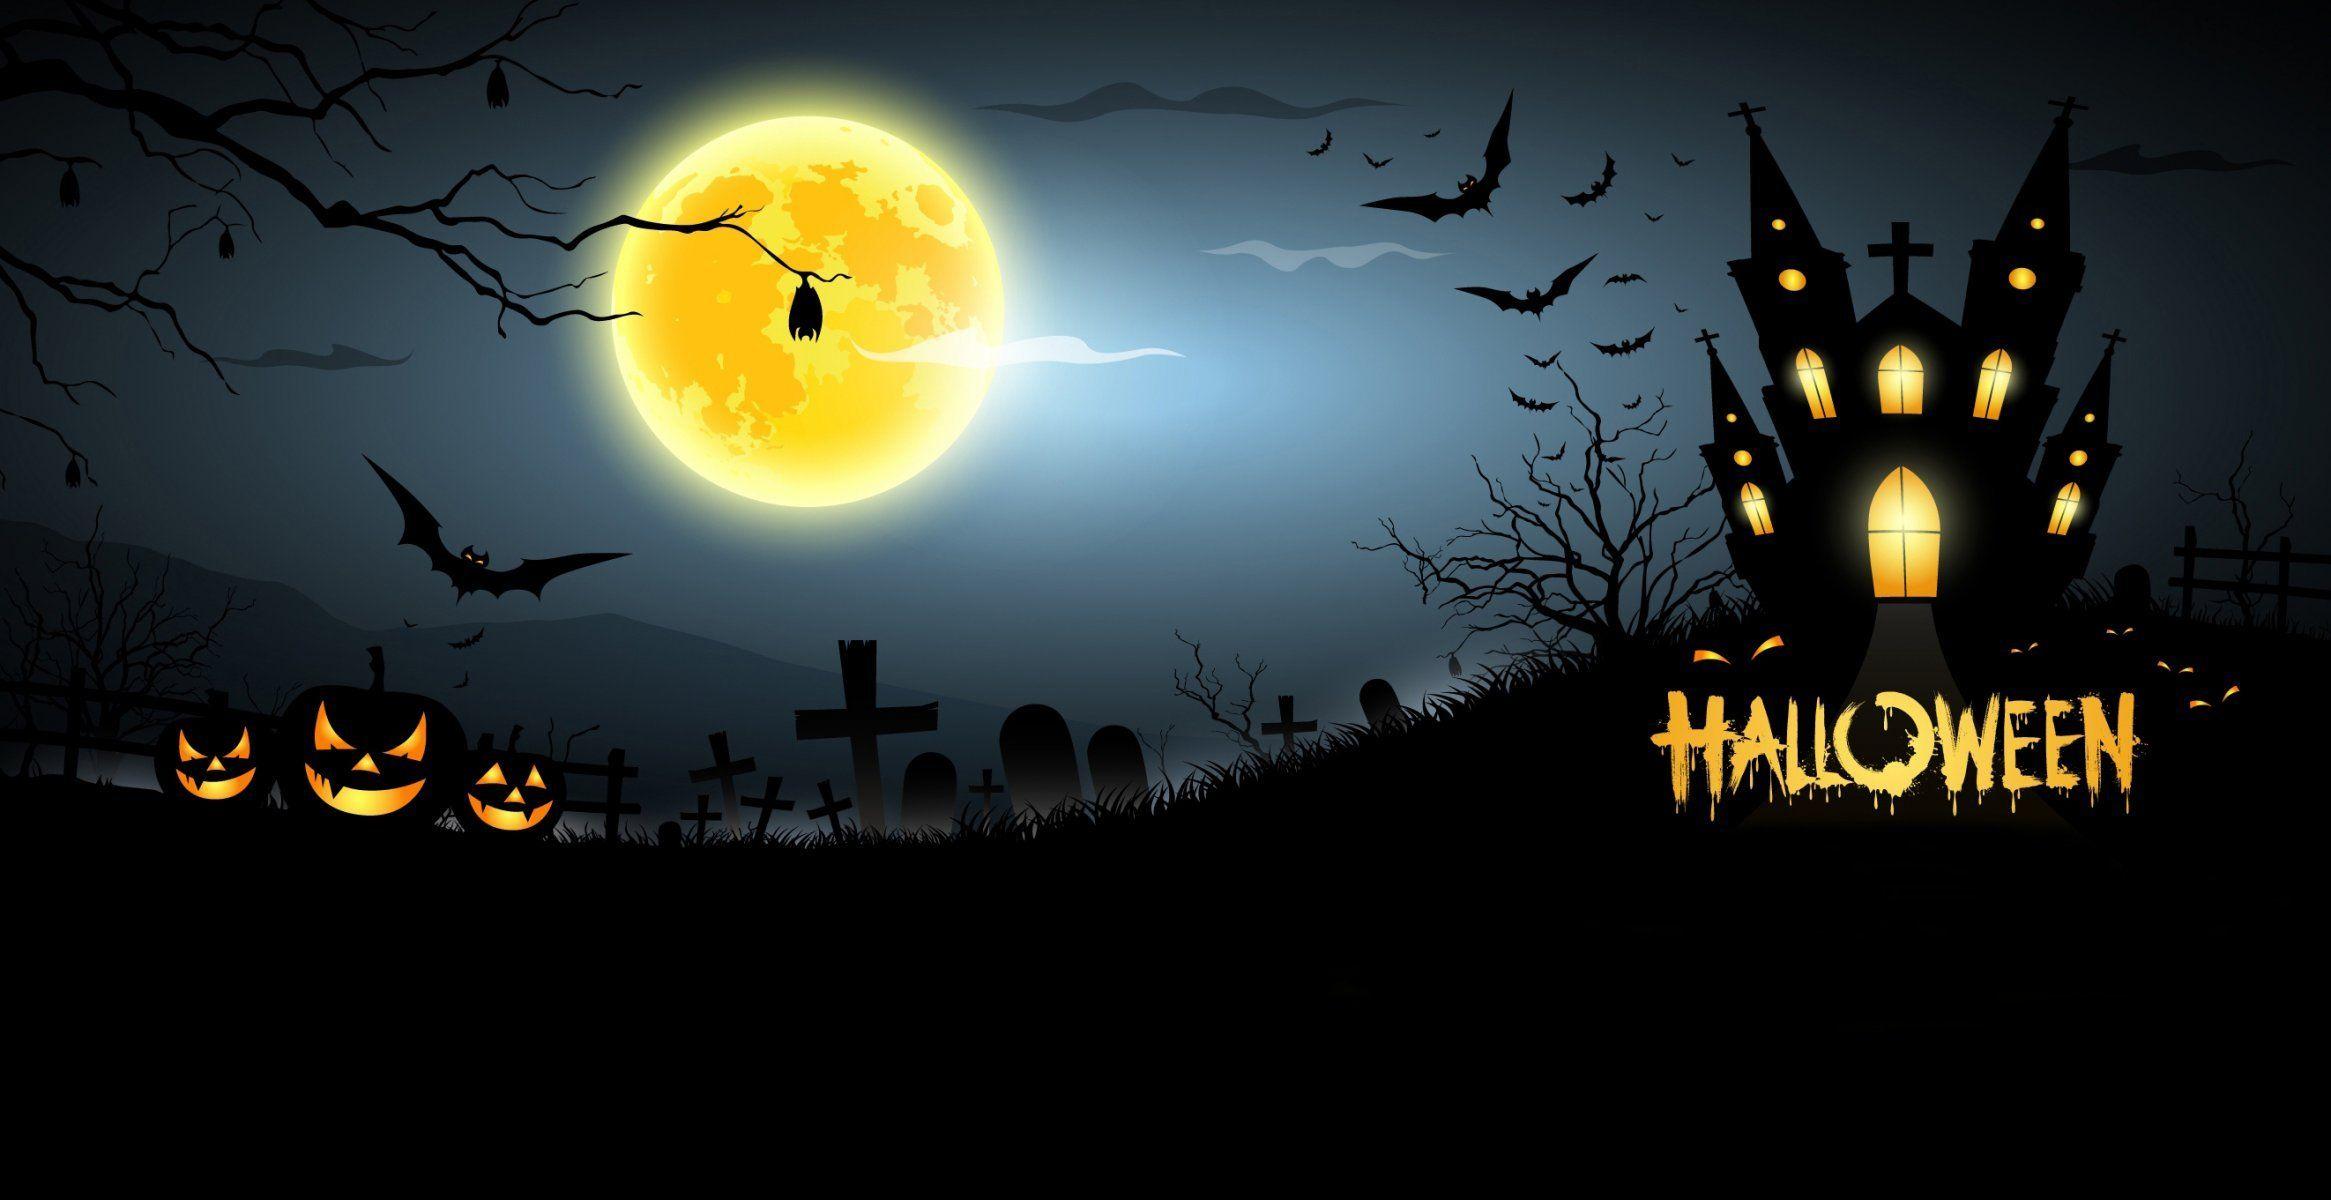 halloween creepy scary horror pumpkins bats house graveyard full